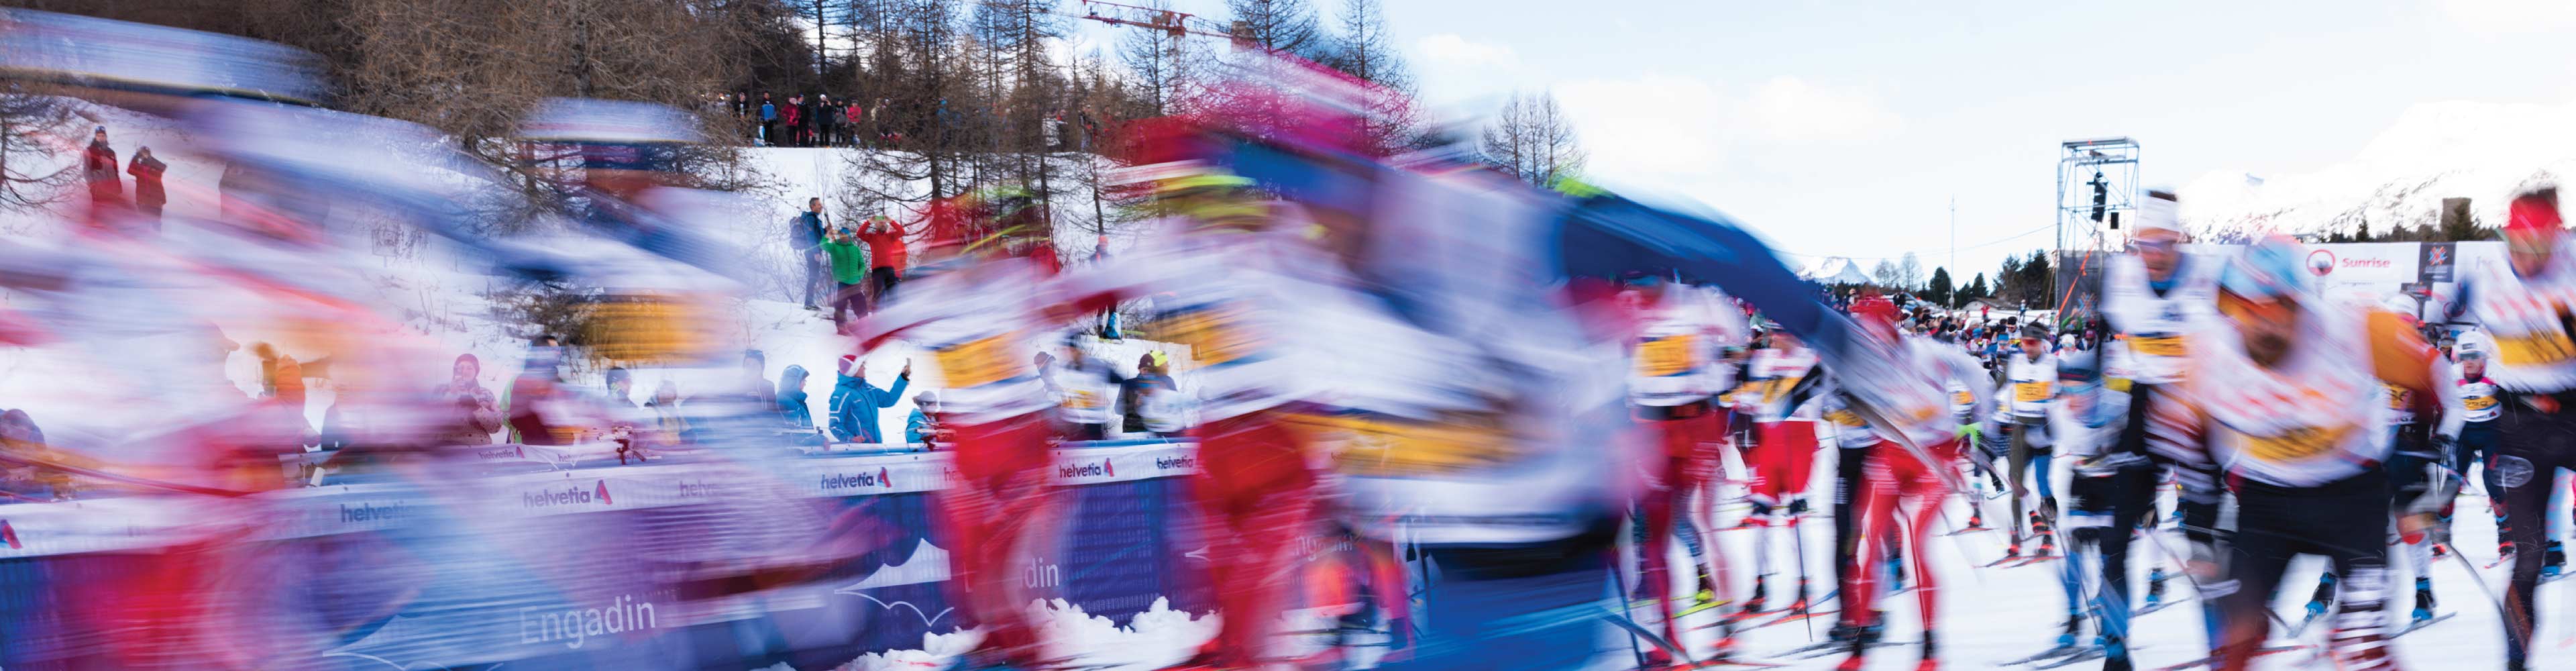 ESM athletes racing fast at the marathon in Engadin